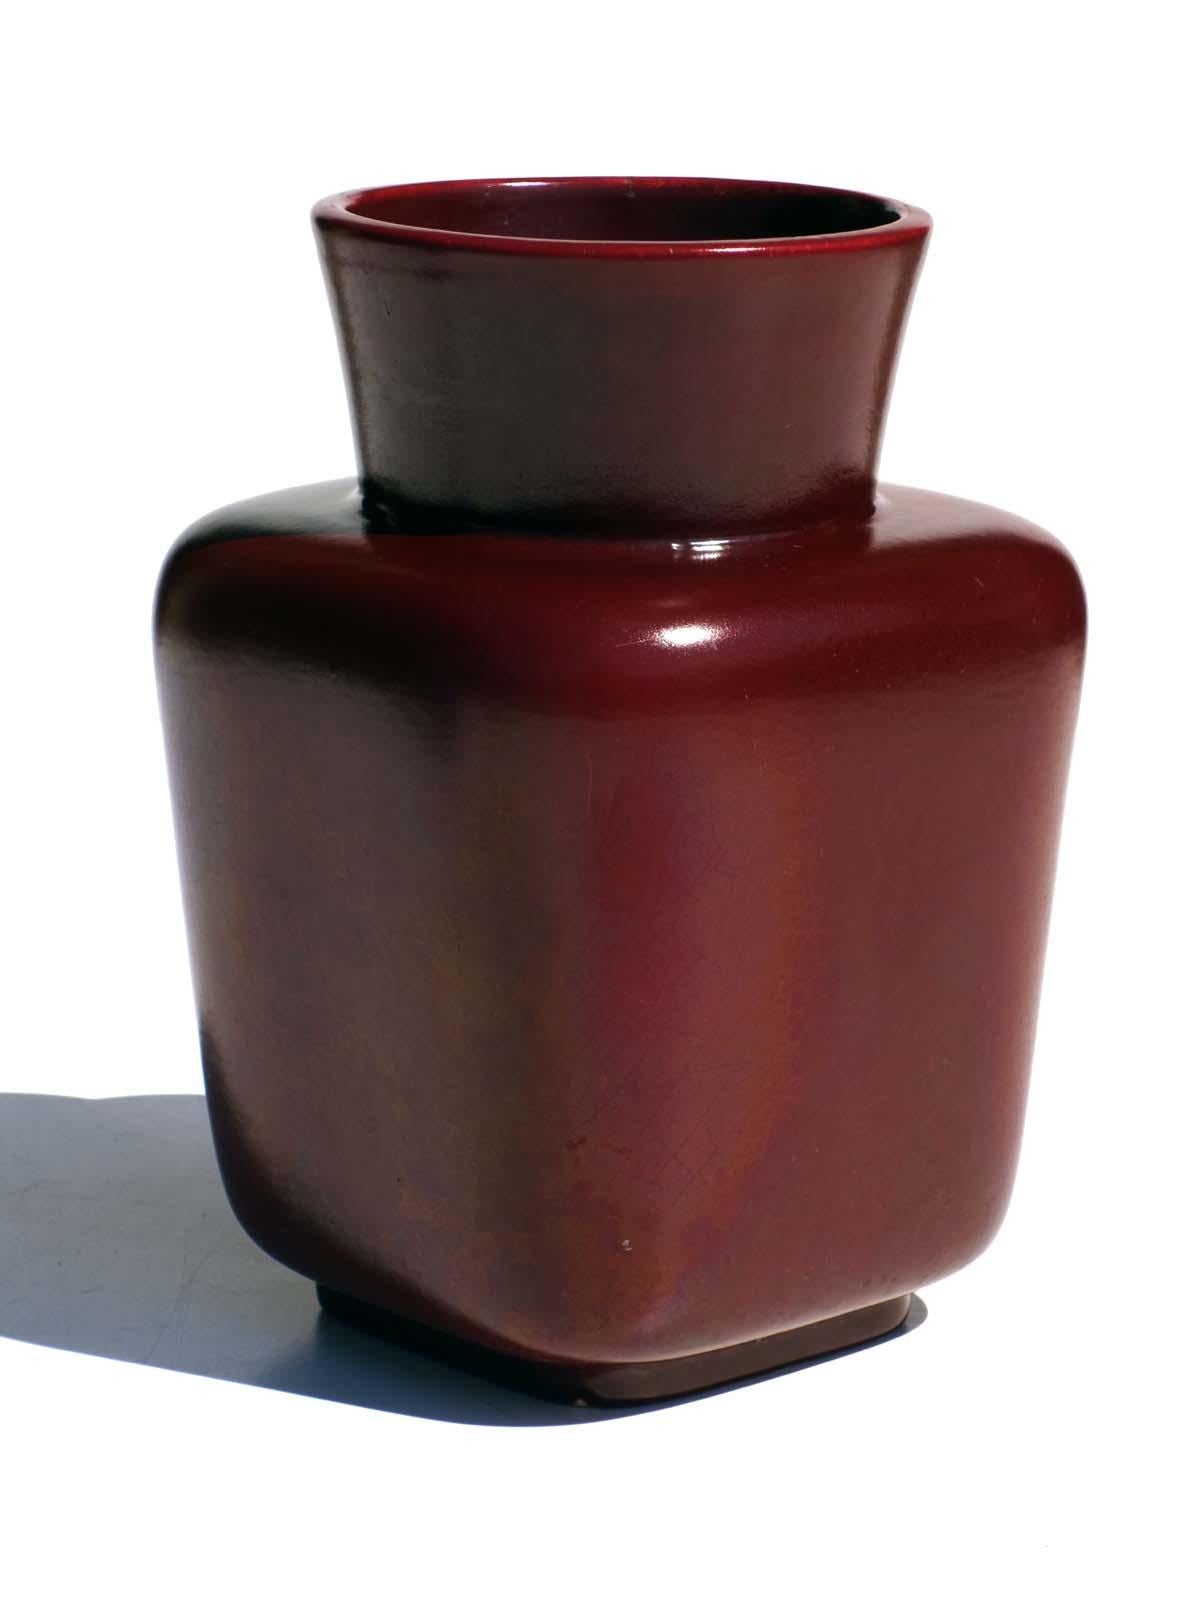 Giovanni Gariboldi
San Cristoforo, Milan
1930s

Bordeaux ceramic vase
Excellent condition.